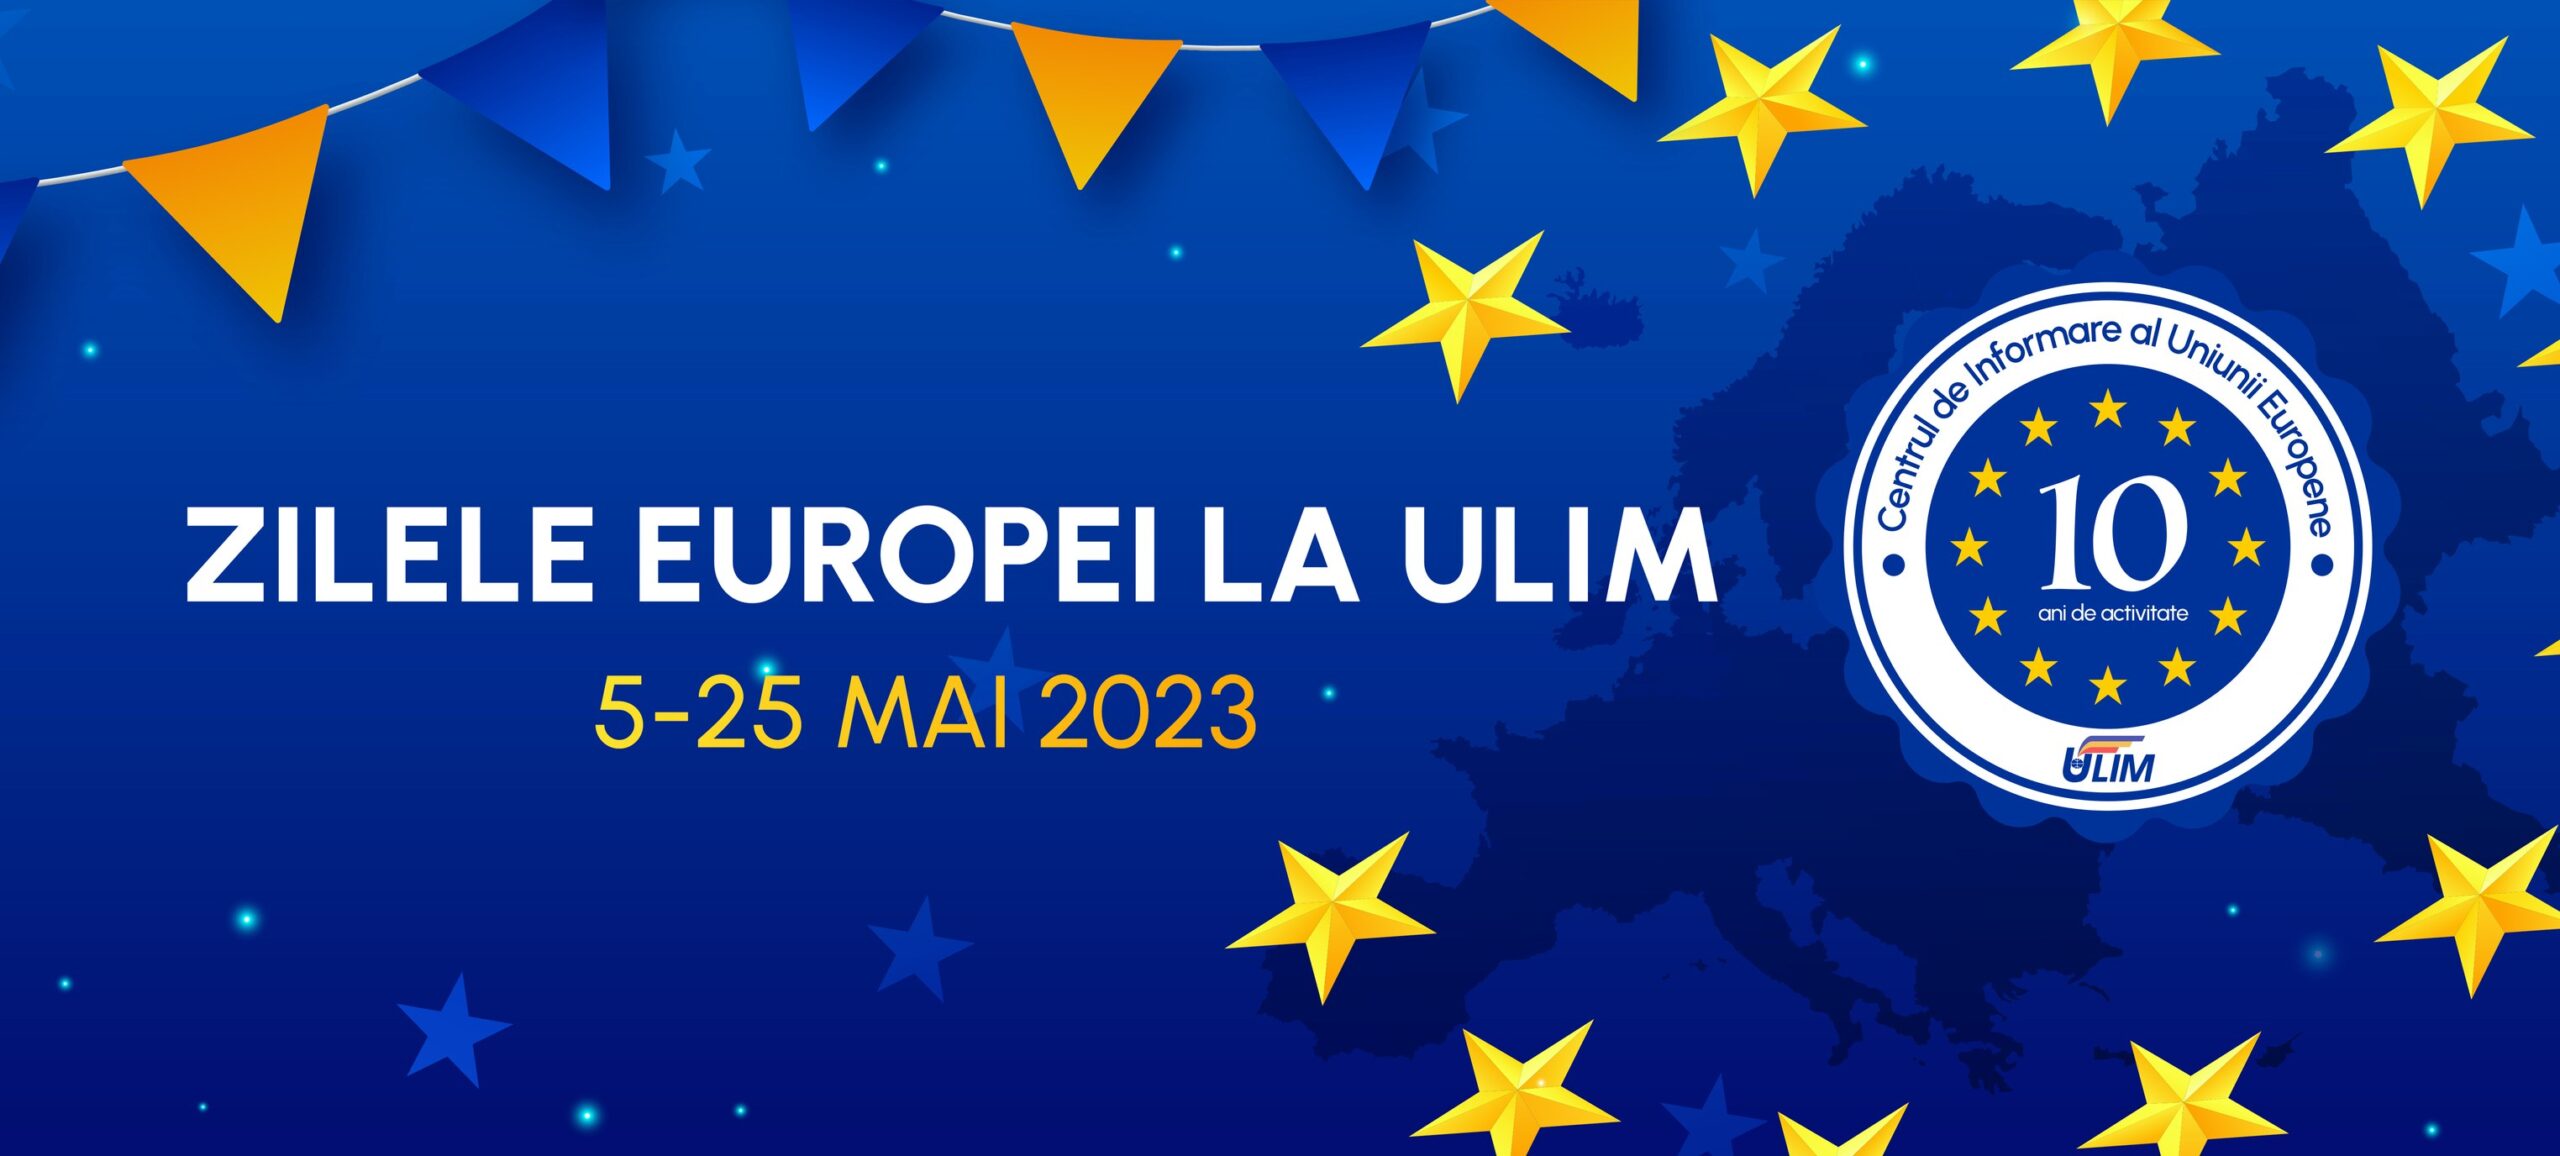 Zilele Europei la ULIM